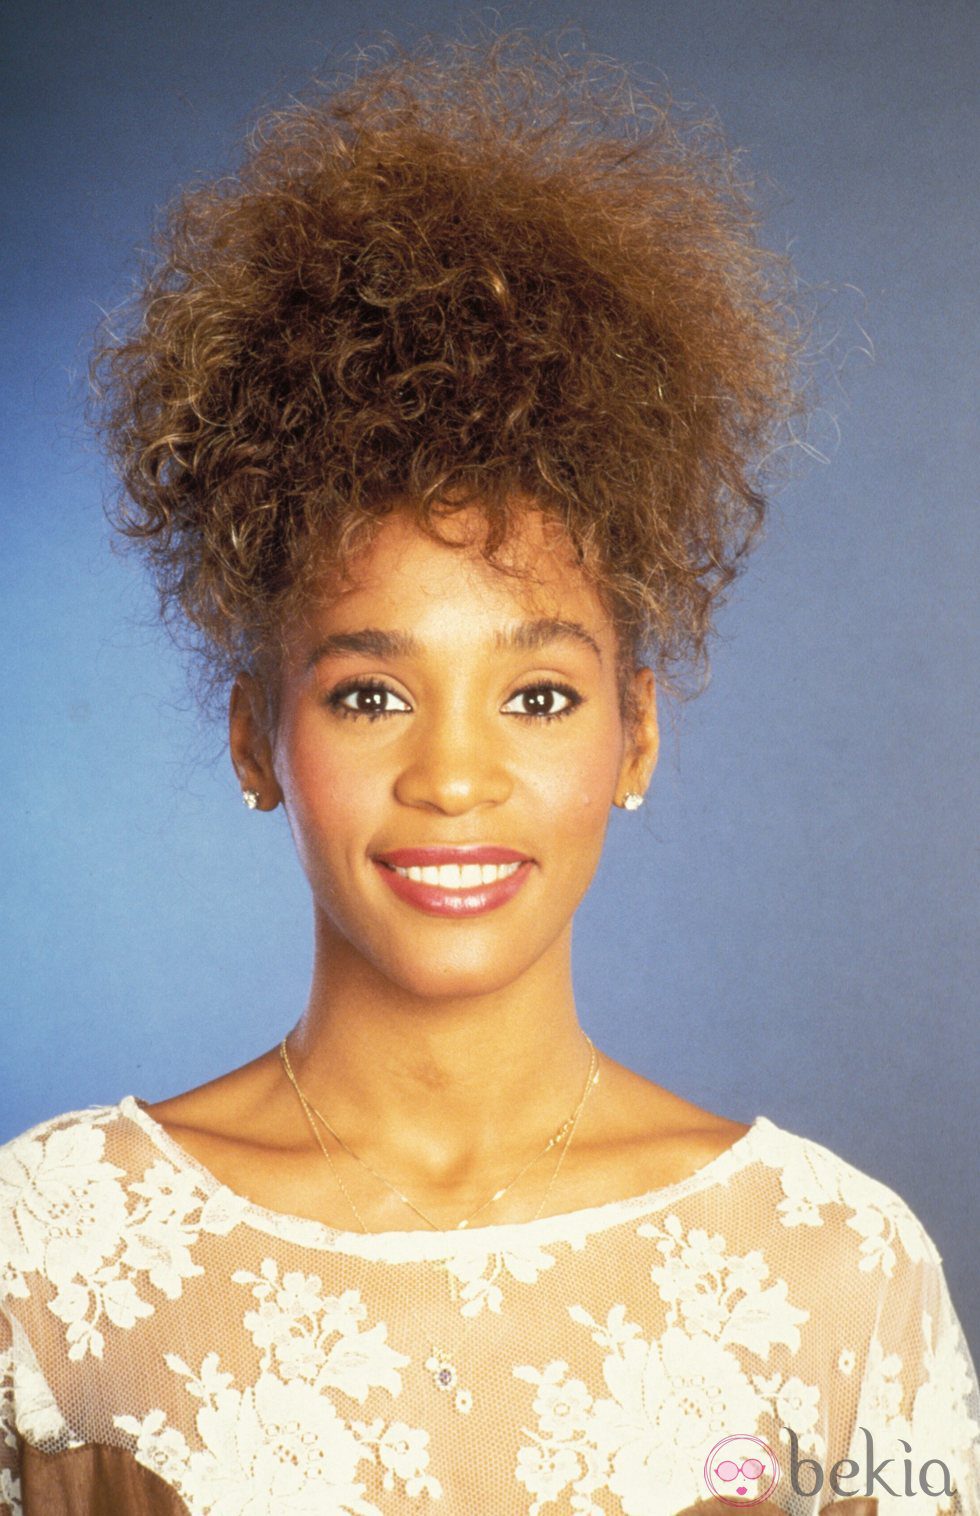 Whitney Houston en la década de los 80